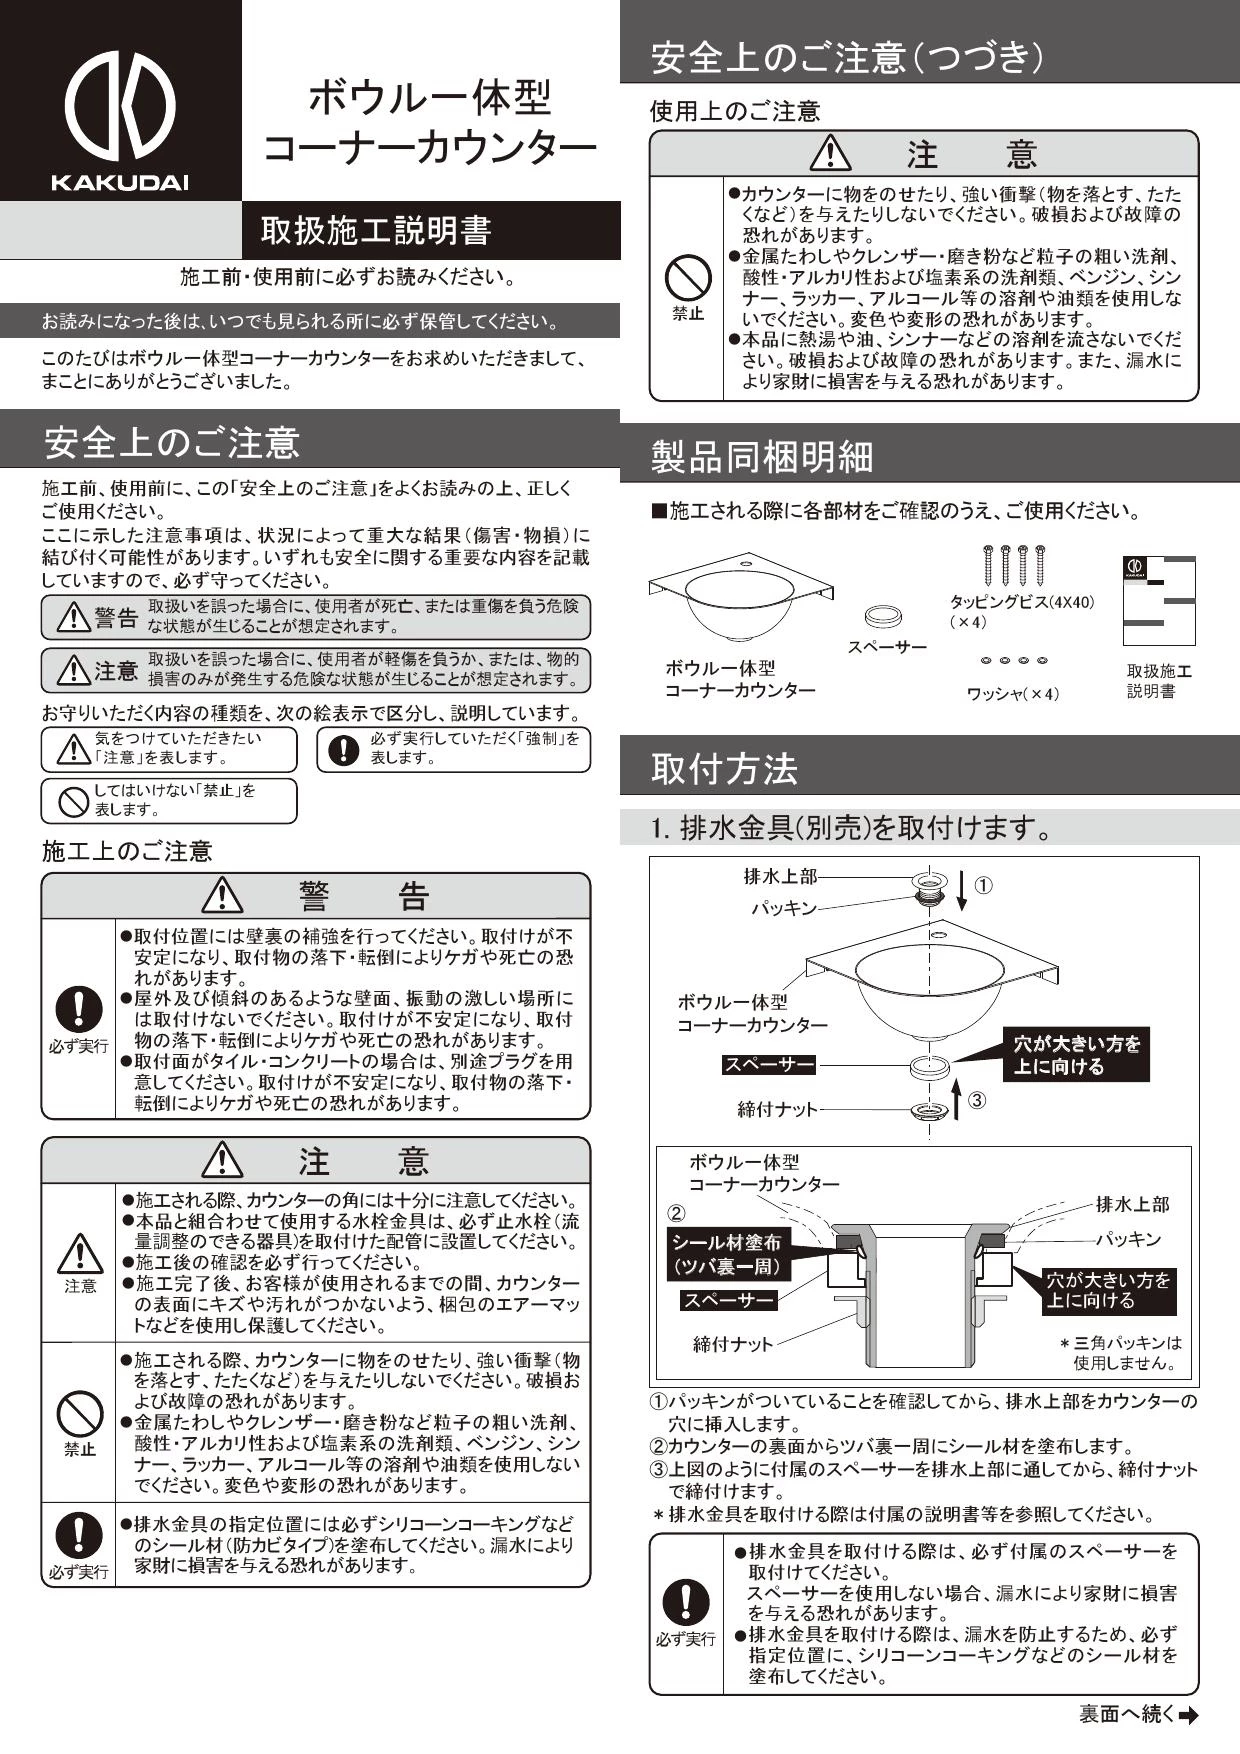 日本緑十字社 高輝度反射テープ SL2045-KY 1巻 390020 - 1